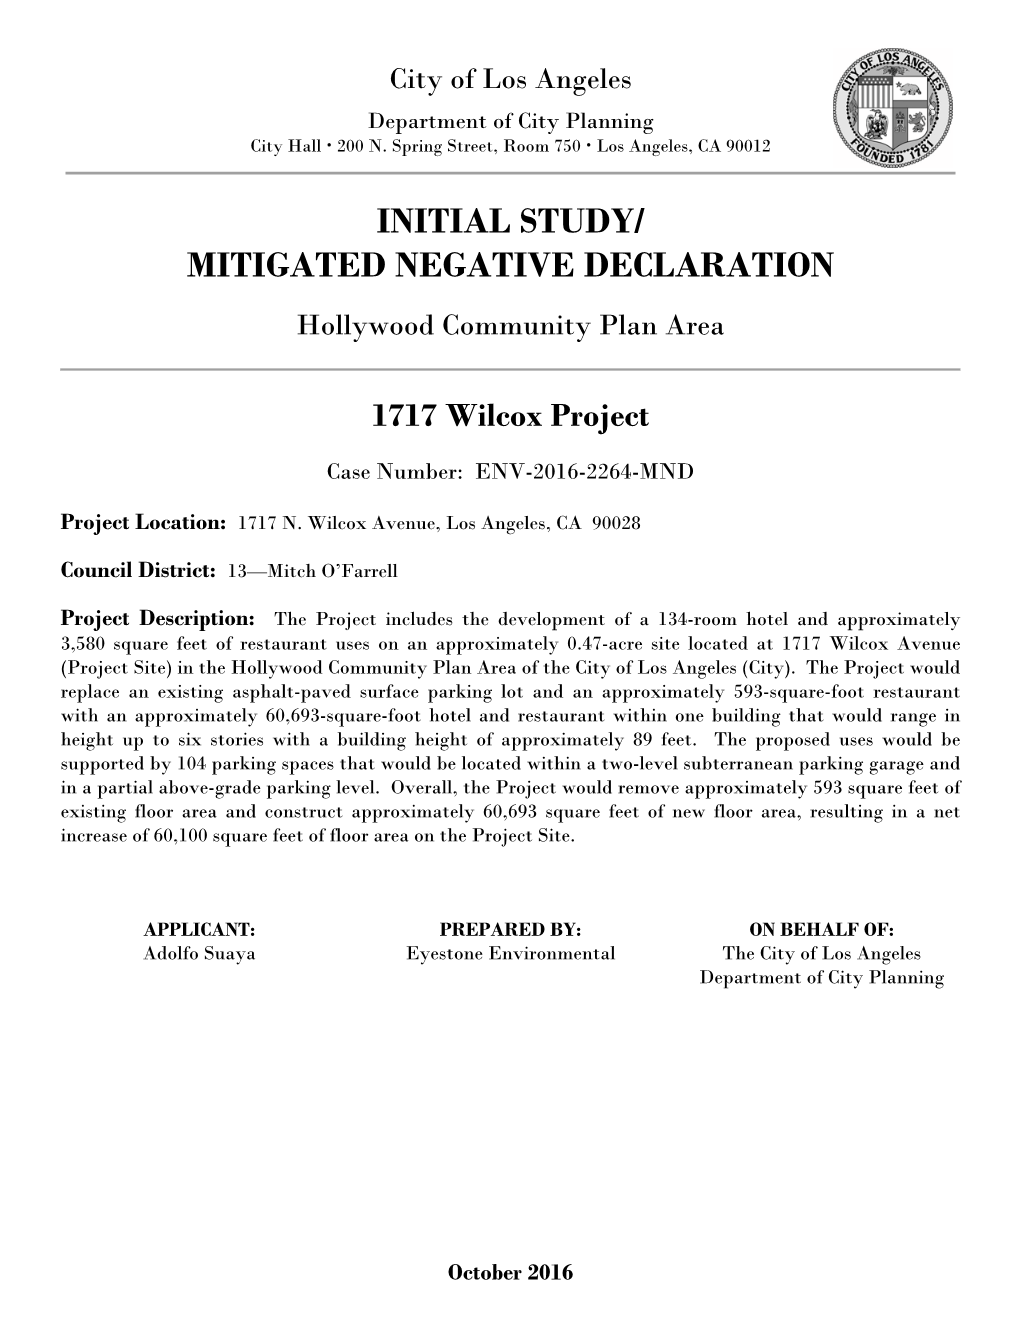 INITIAL STUDY/ MITIGATED NEGATIVE DECLARATION Hollywood Community Plan Area